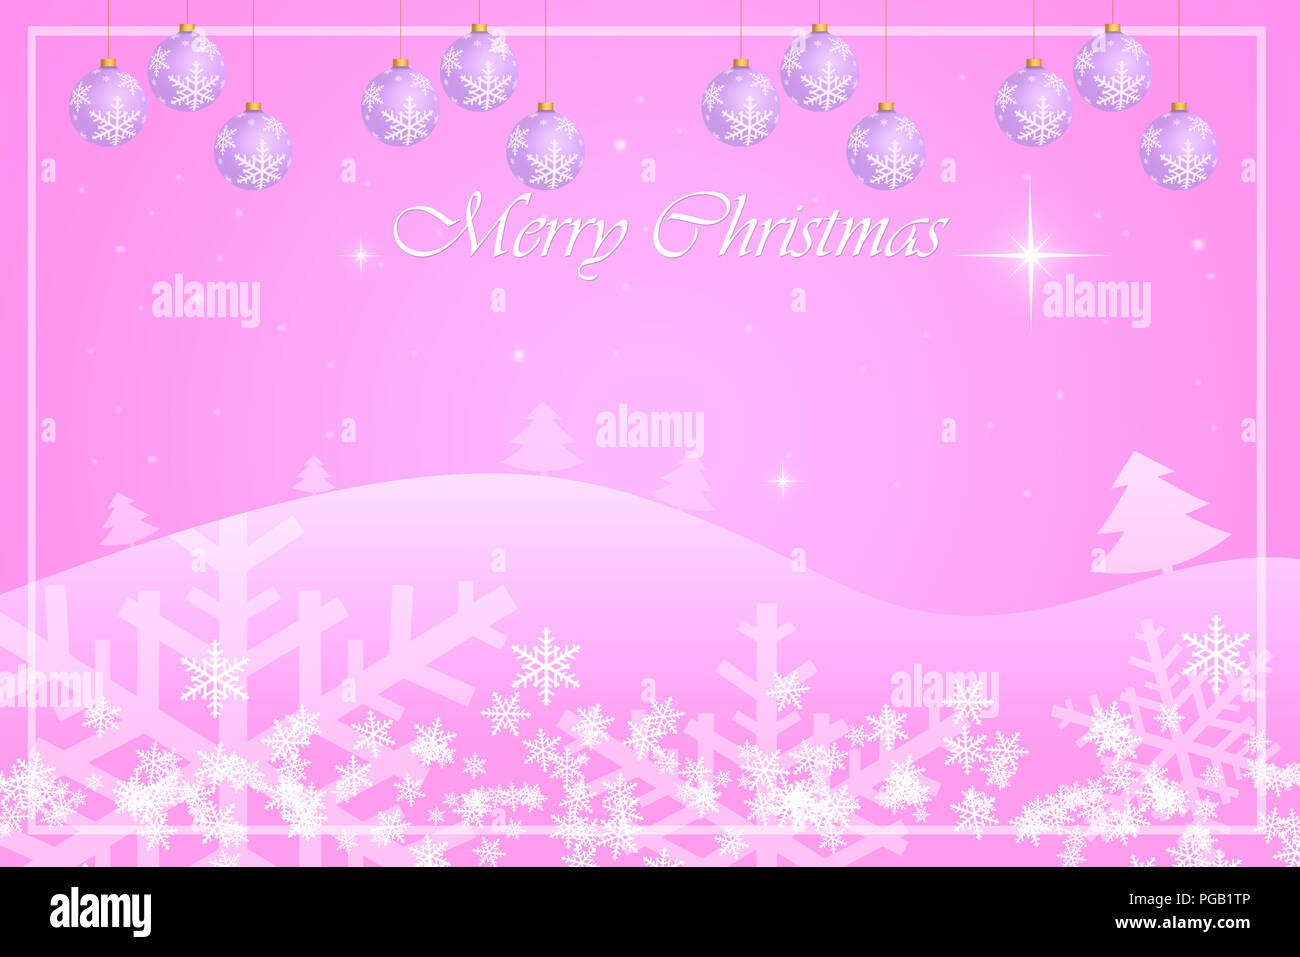 Christmas greeting card template design Stock Photo